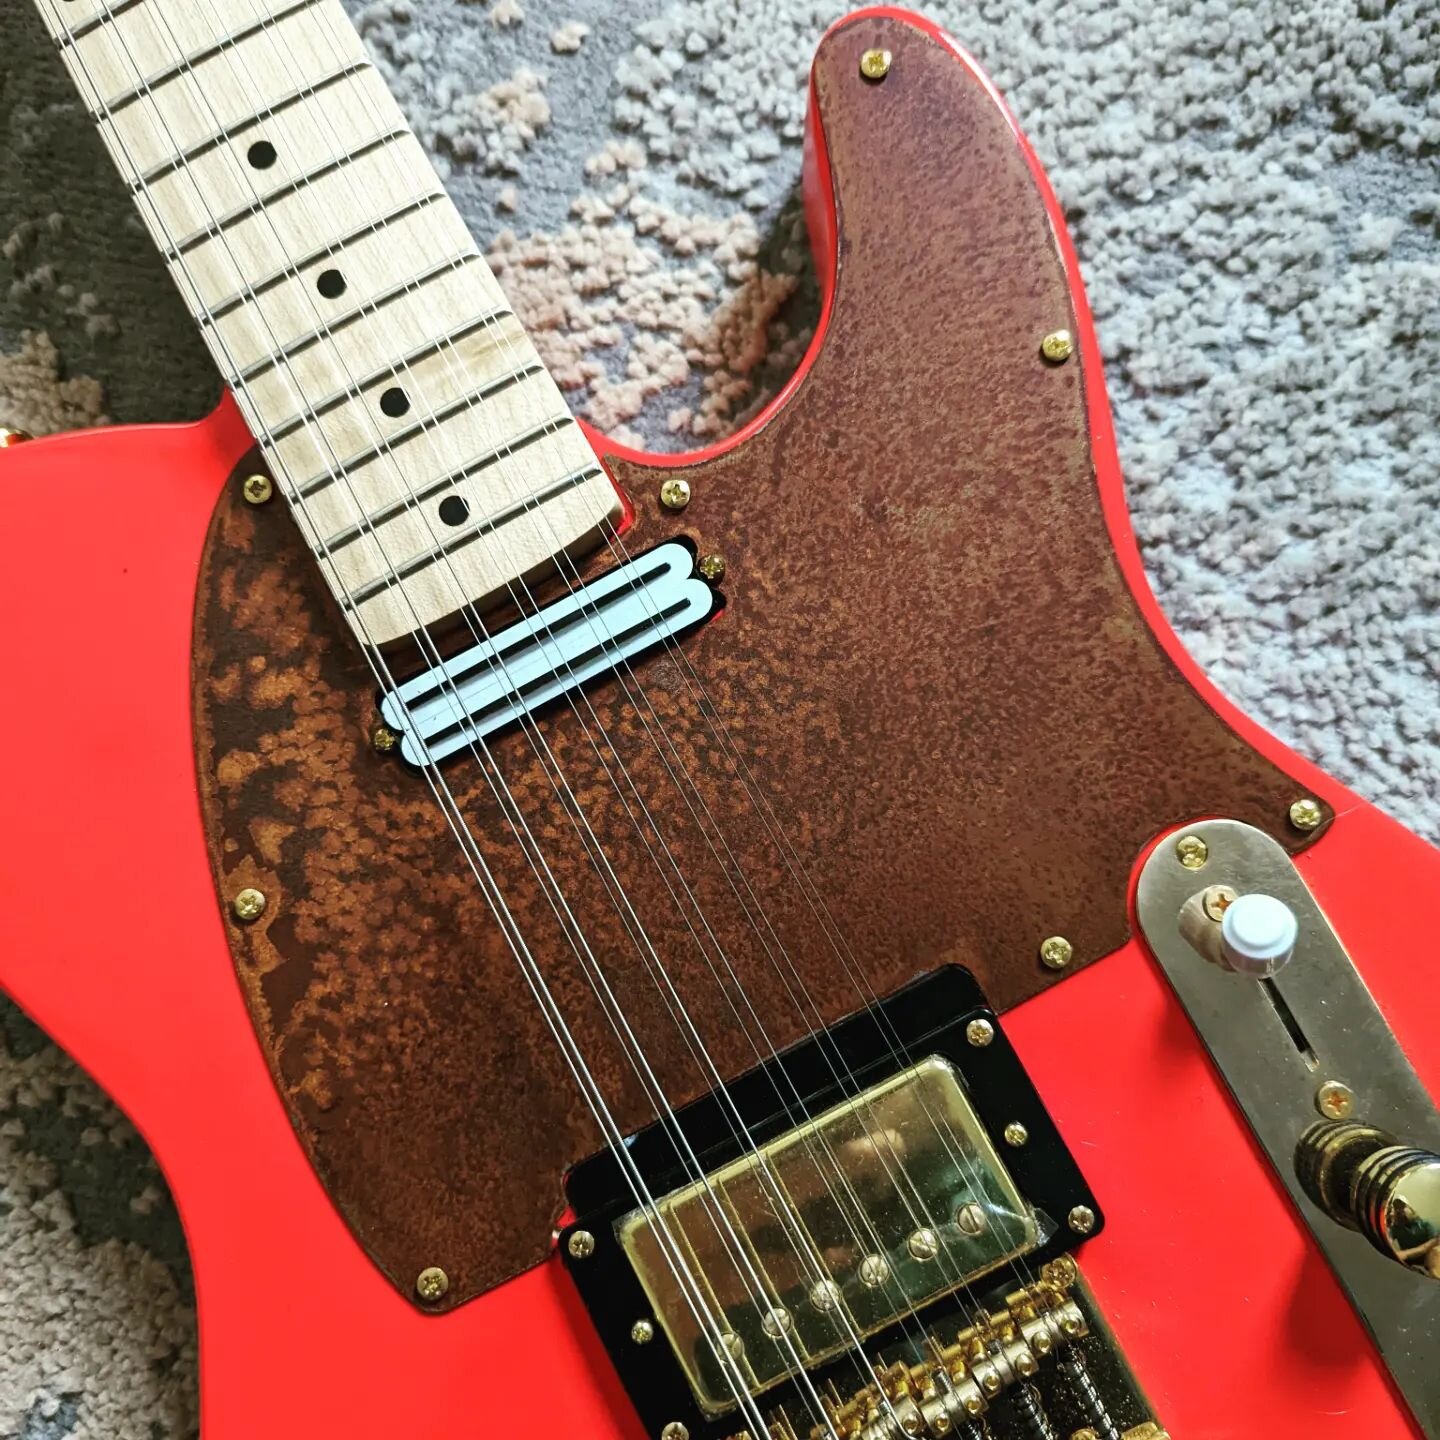 Rusty Rock &amp; Roll!
Custom pickguard for a lovely Fender.